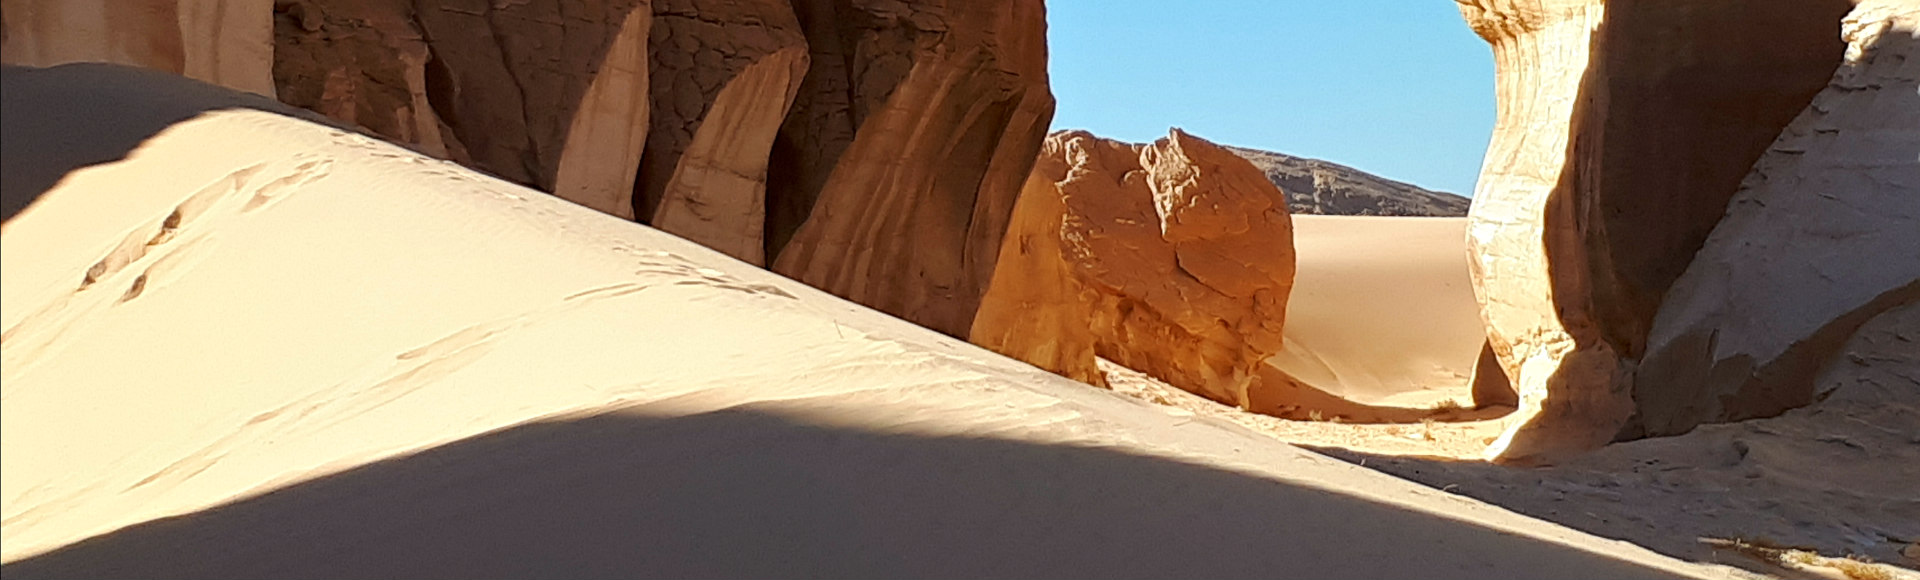 Sinaiwoestijn DesertJoy